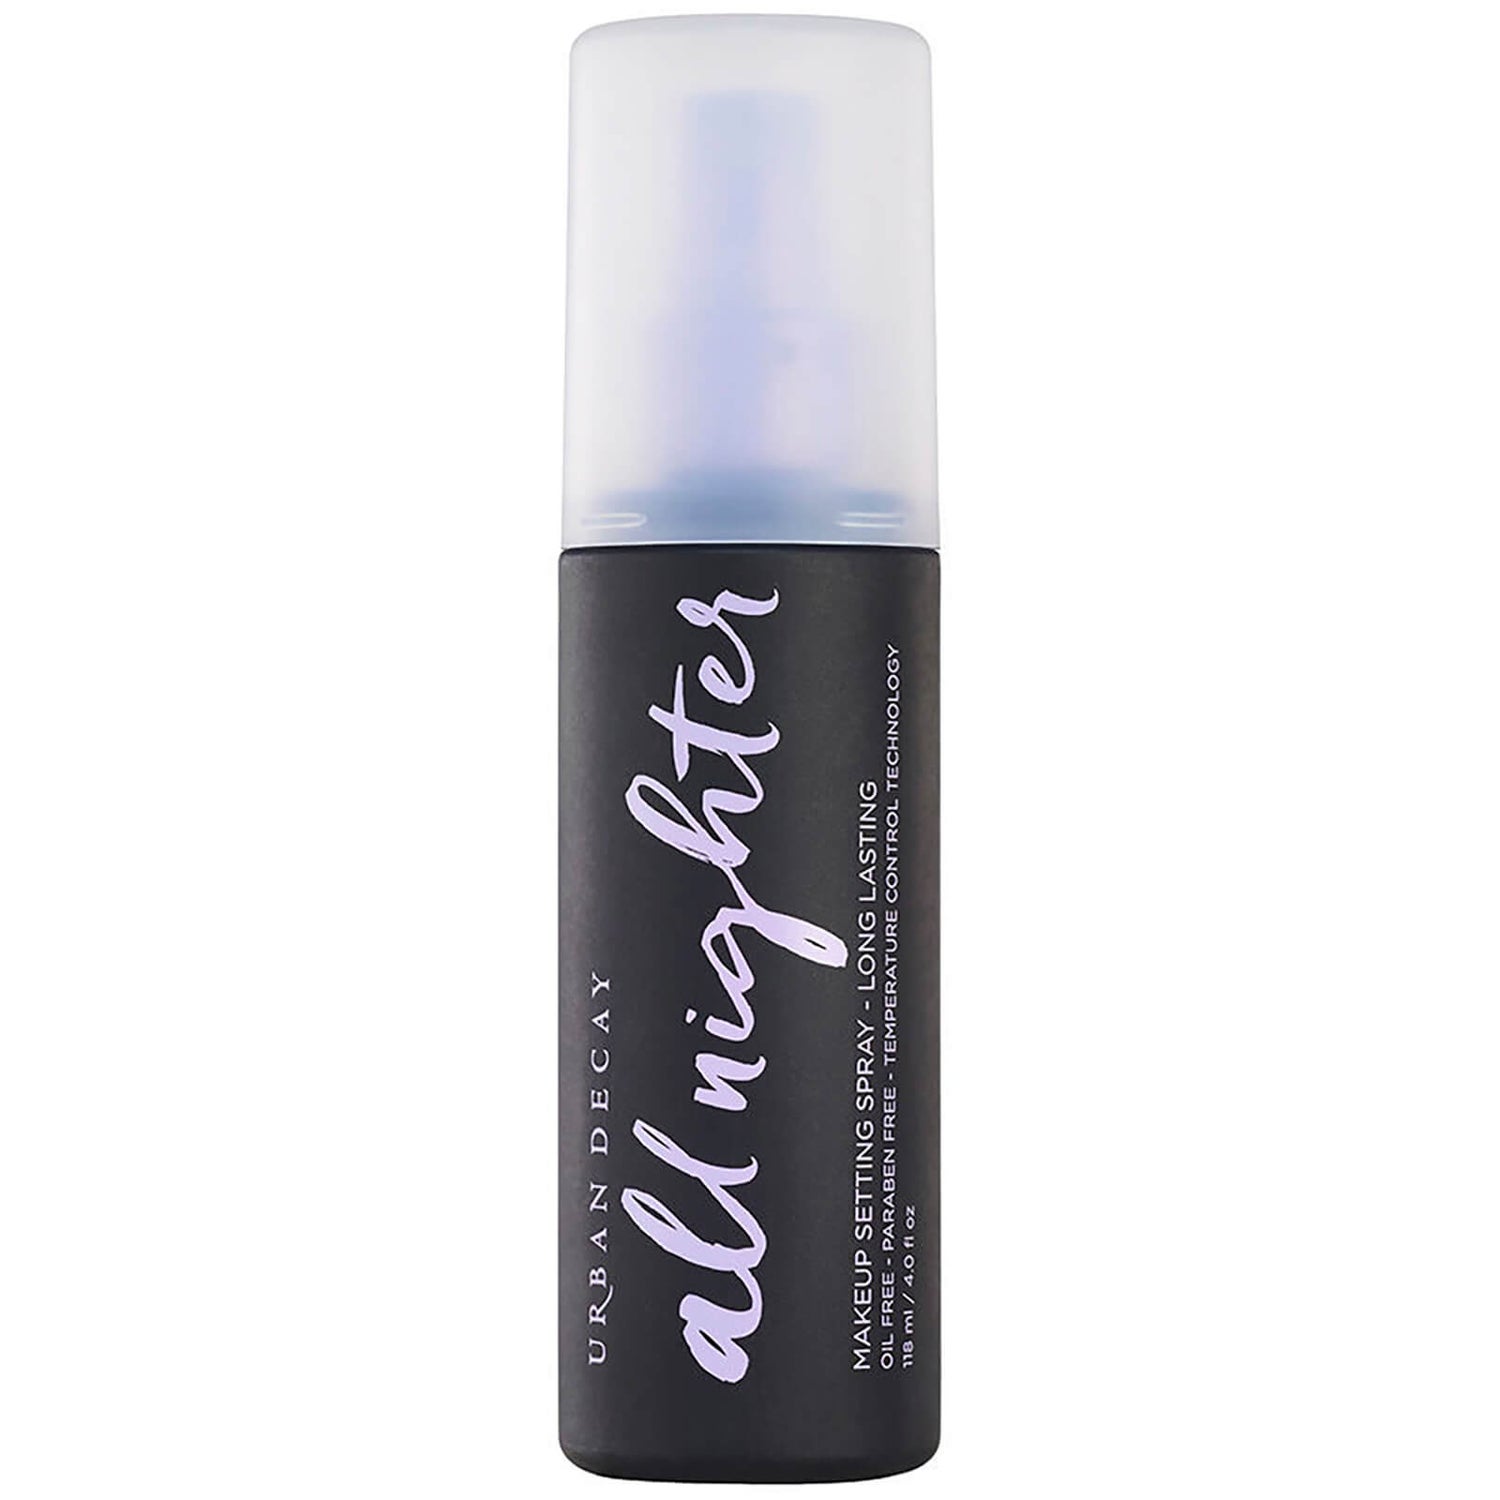 Spray Fixateur de Maquillage All Nighter Urban Decay 118 ml